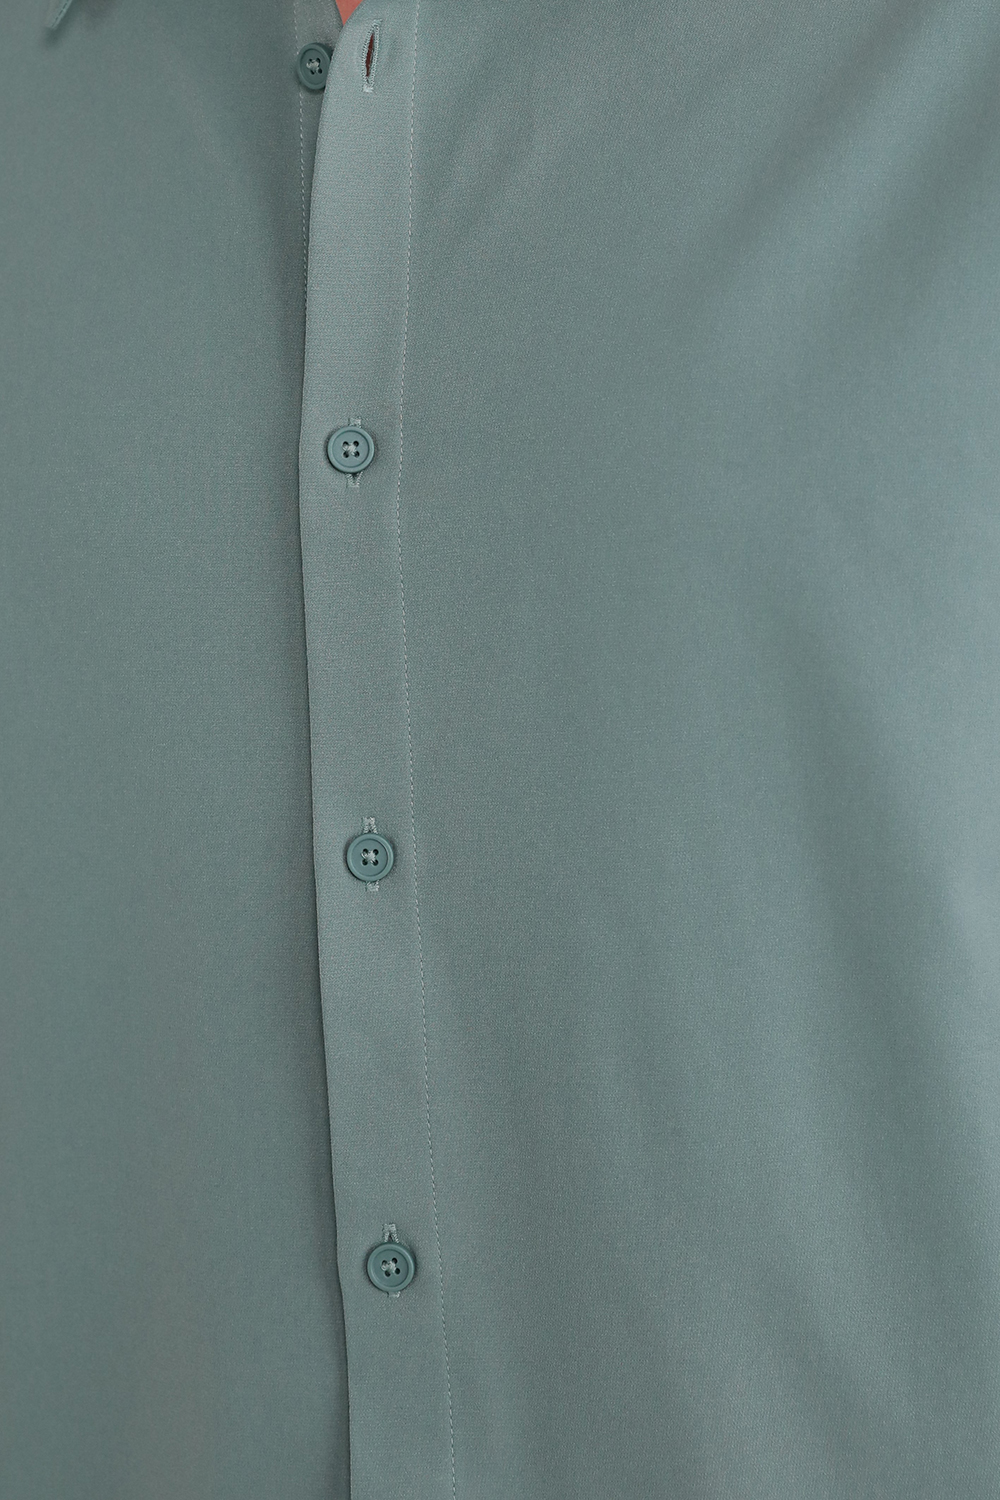 New Venture Classic-Fit Long-Sleeve Shirt LULULEMON